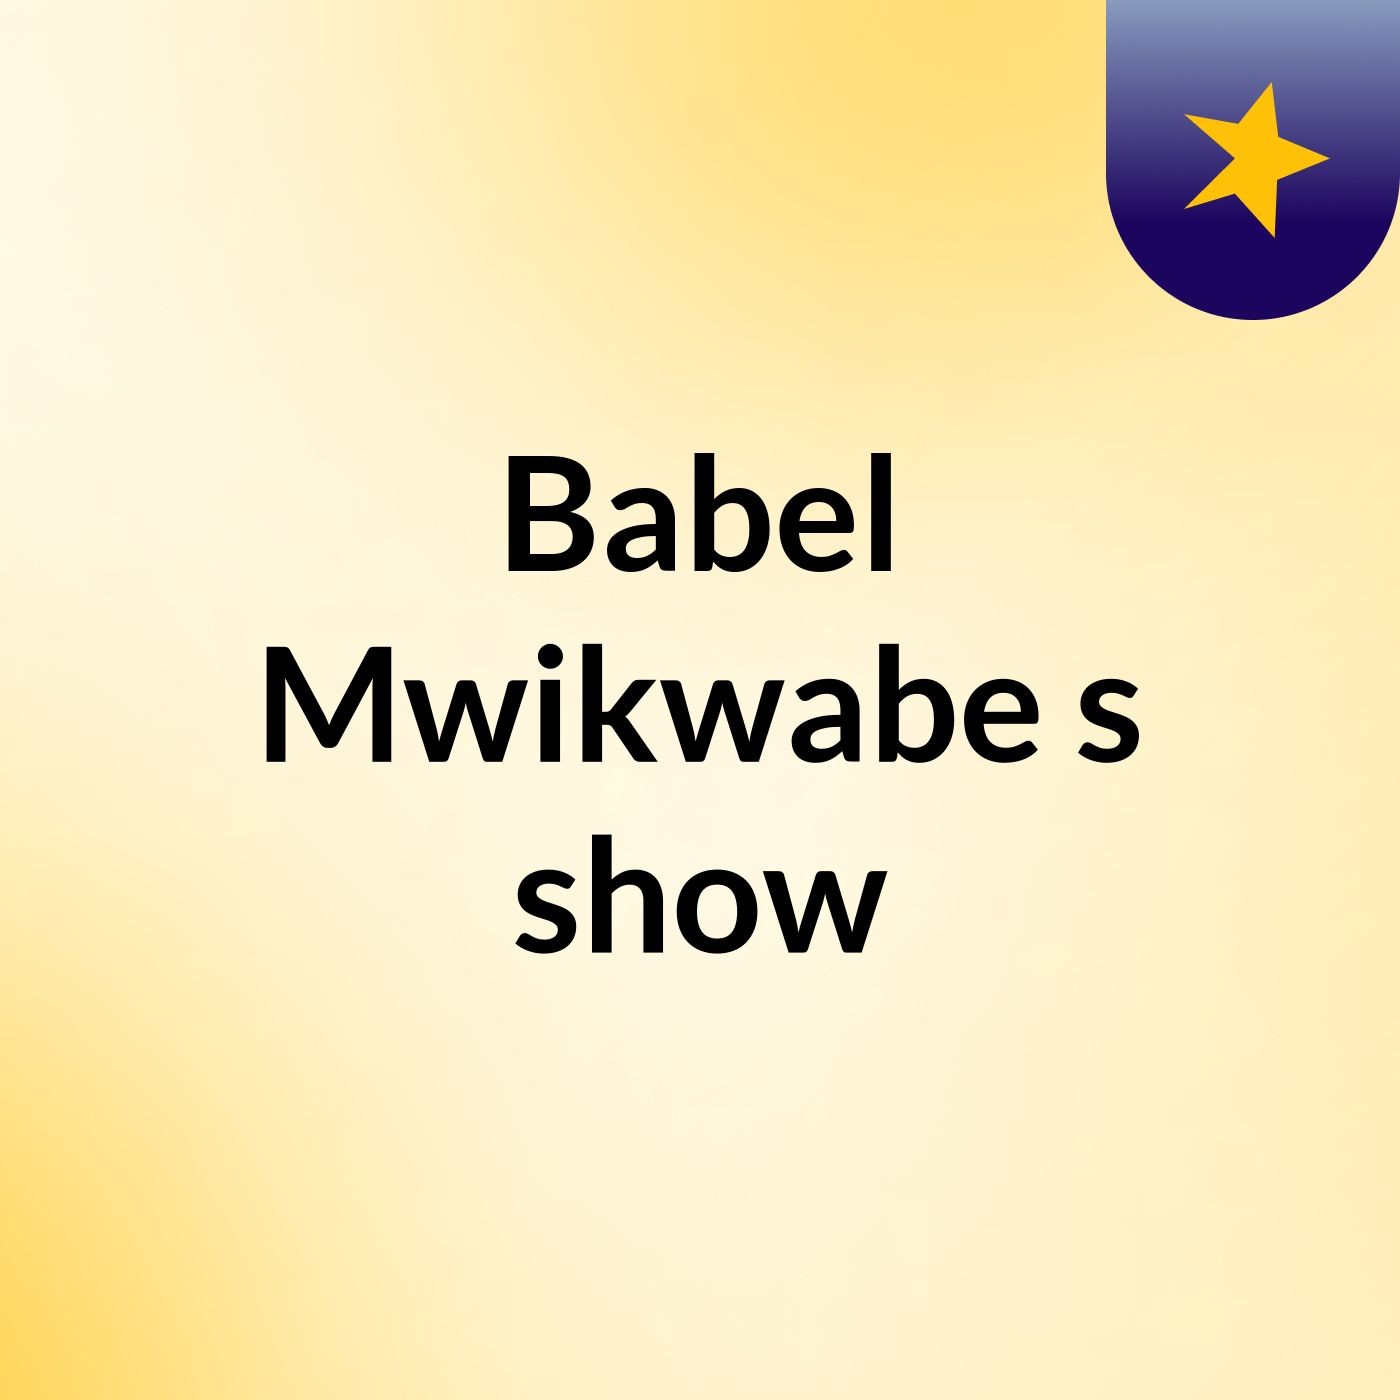 Babel Mwikwabe's show